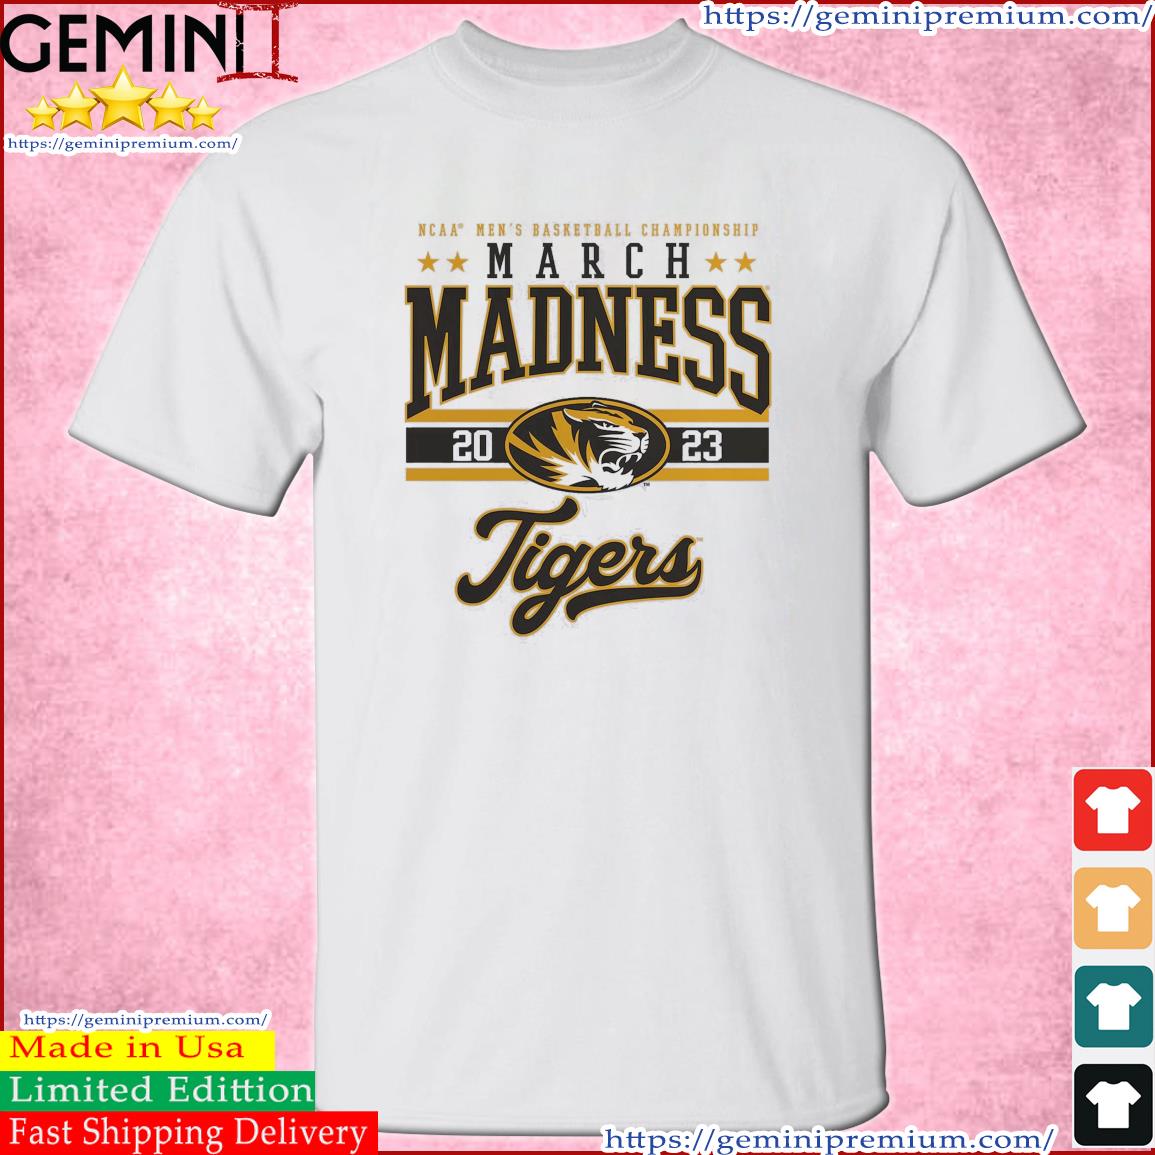 Missouri Tigers NCAA Men's Basketball Tournament March Madness 2023 Shirt